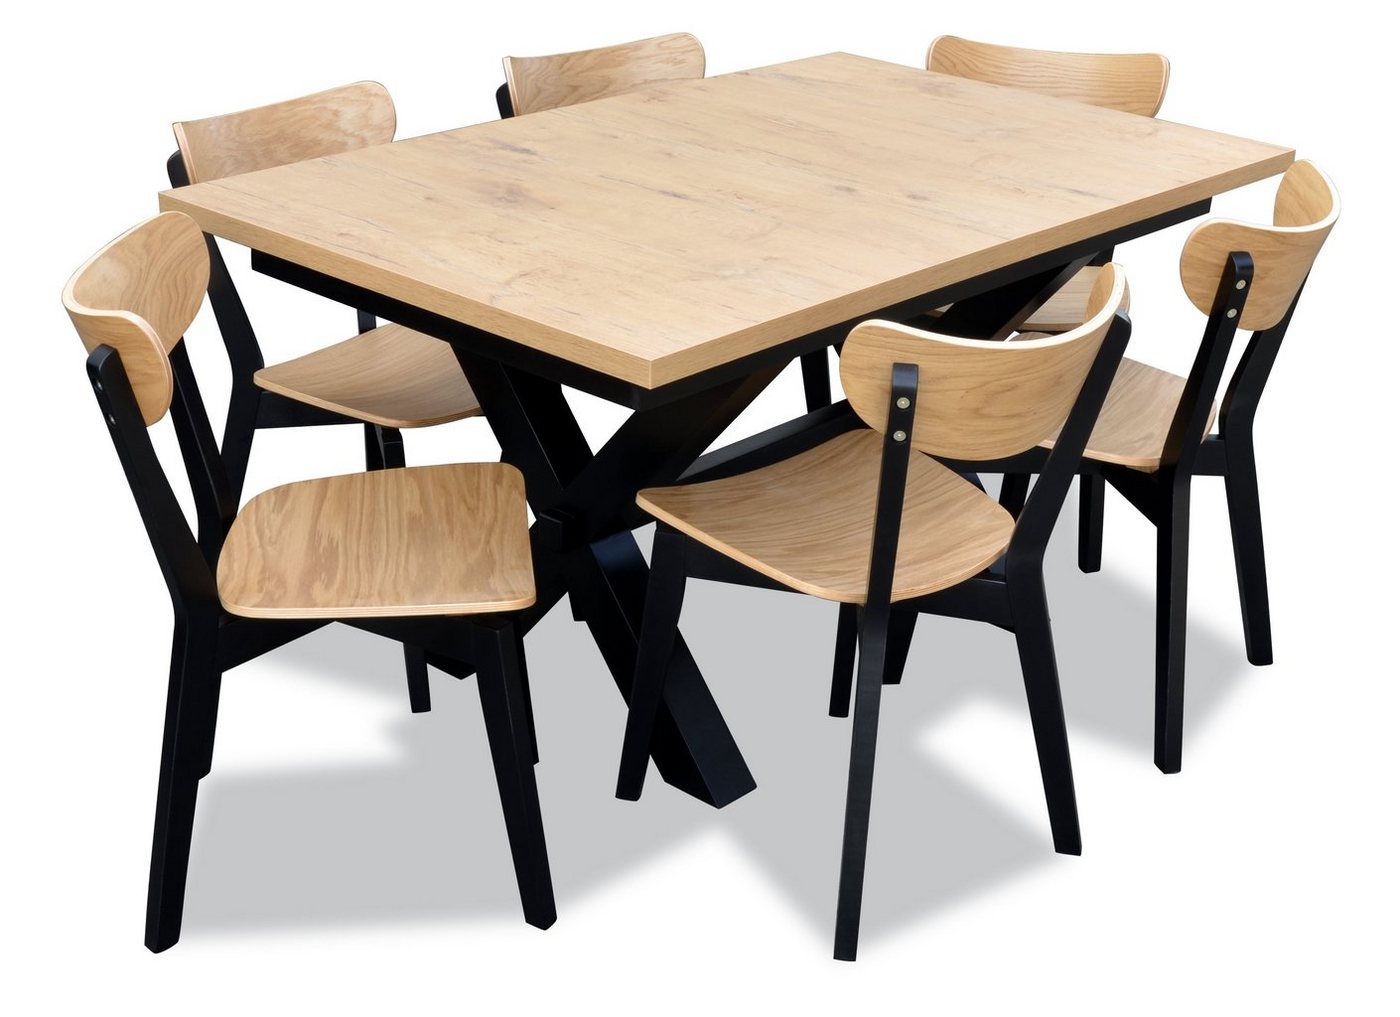 Beautysofa Sitzgruppe Modern Sitzgruppe Esstisch Tischplatte + 6 Polsterstuhle von Beautysofa